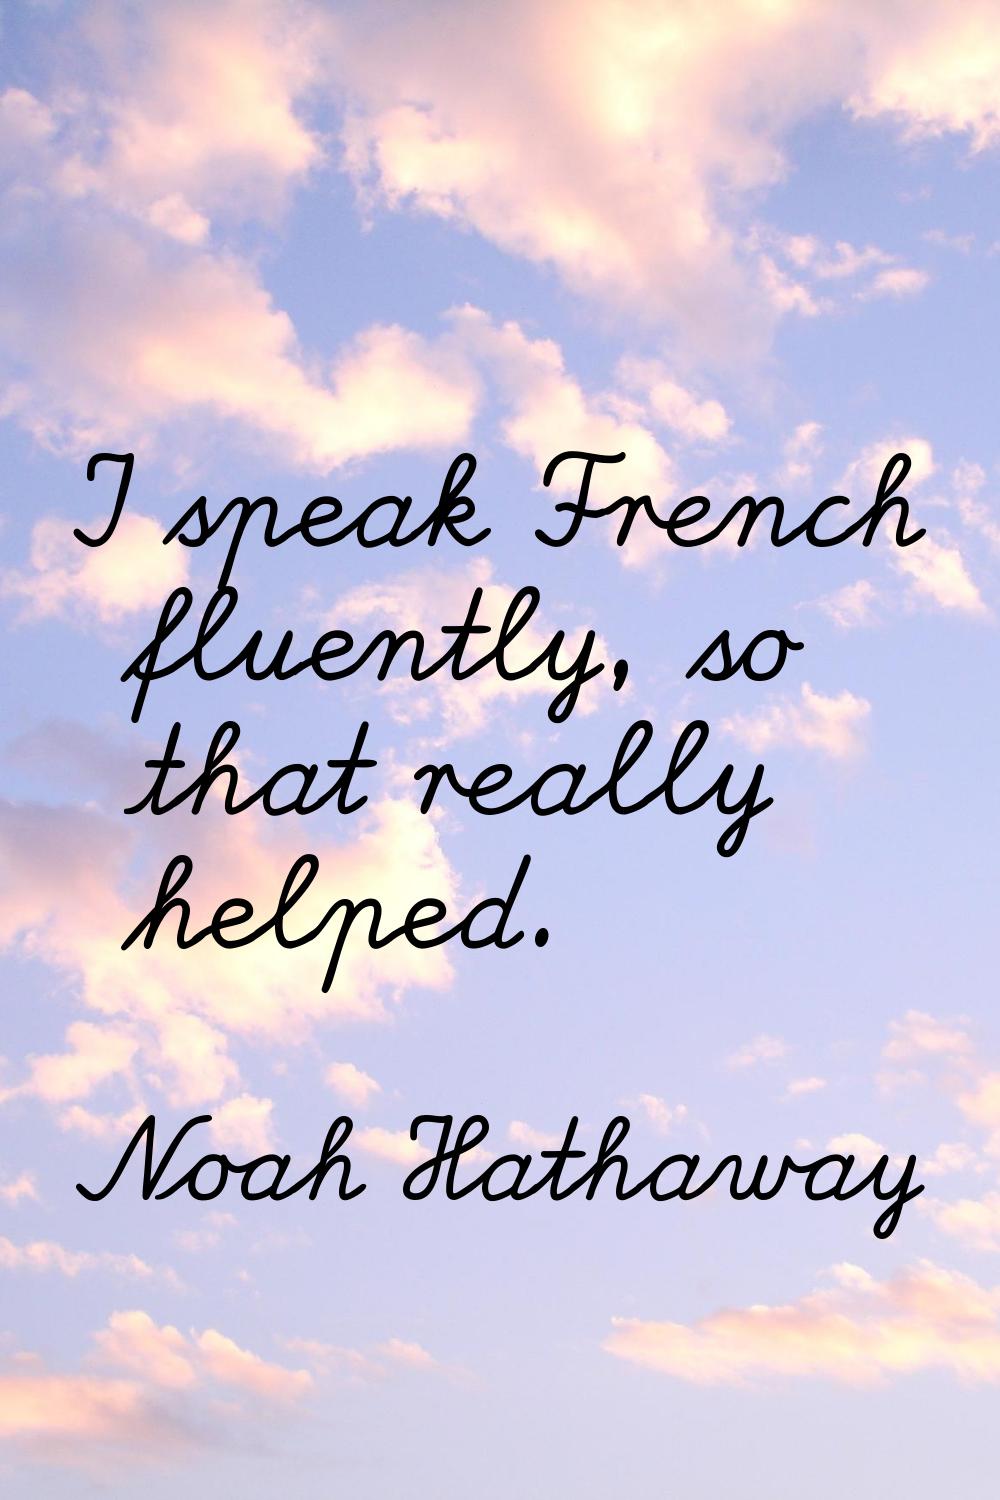 I speak French fluently, so that really helped.